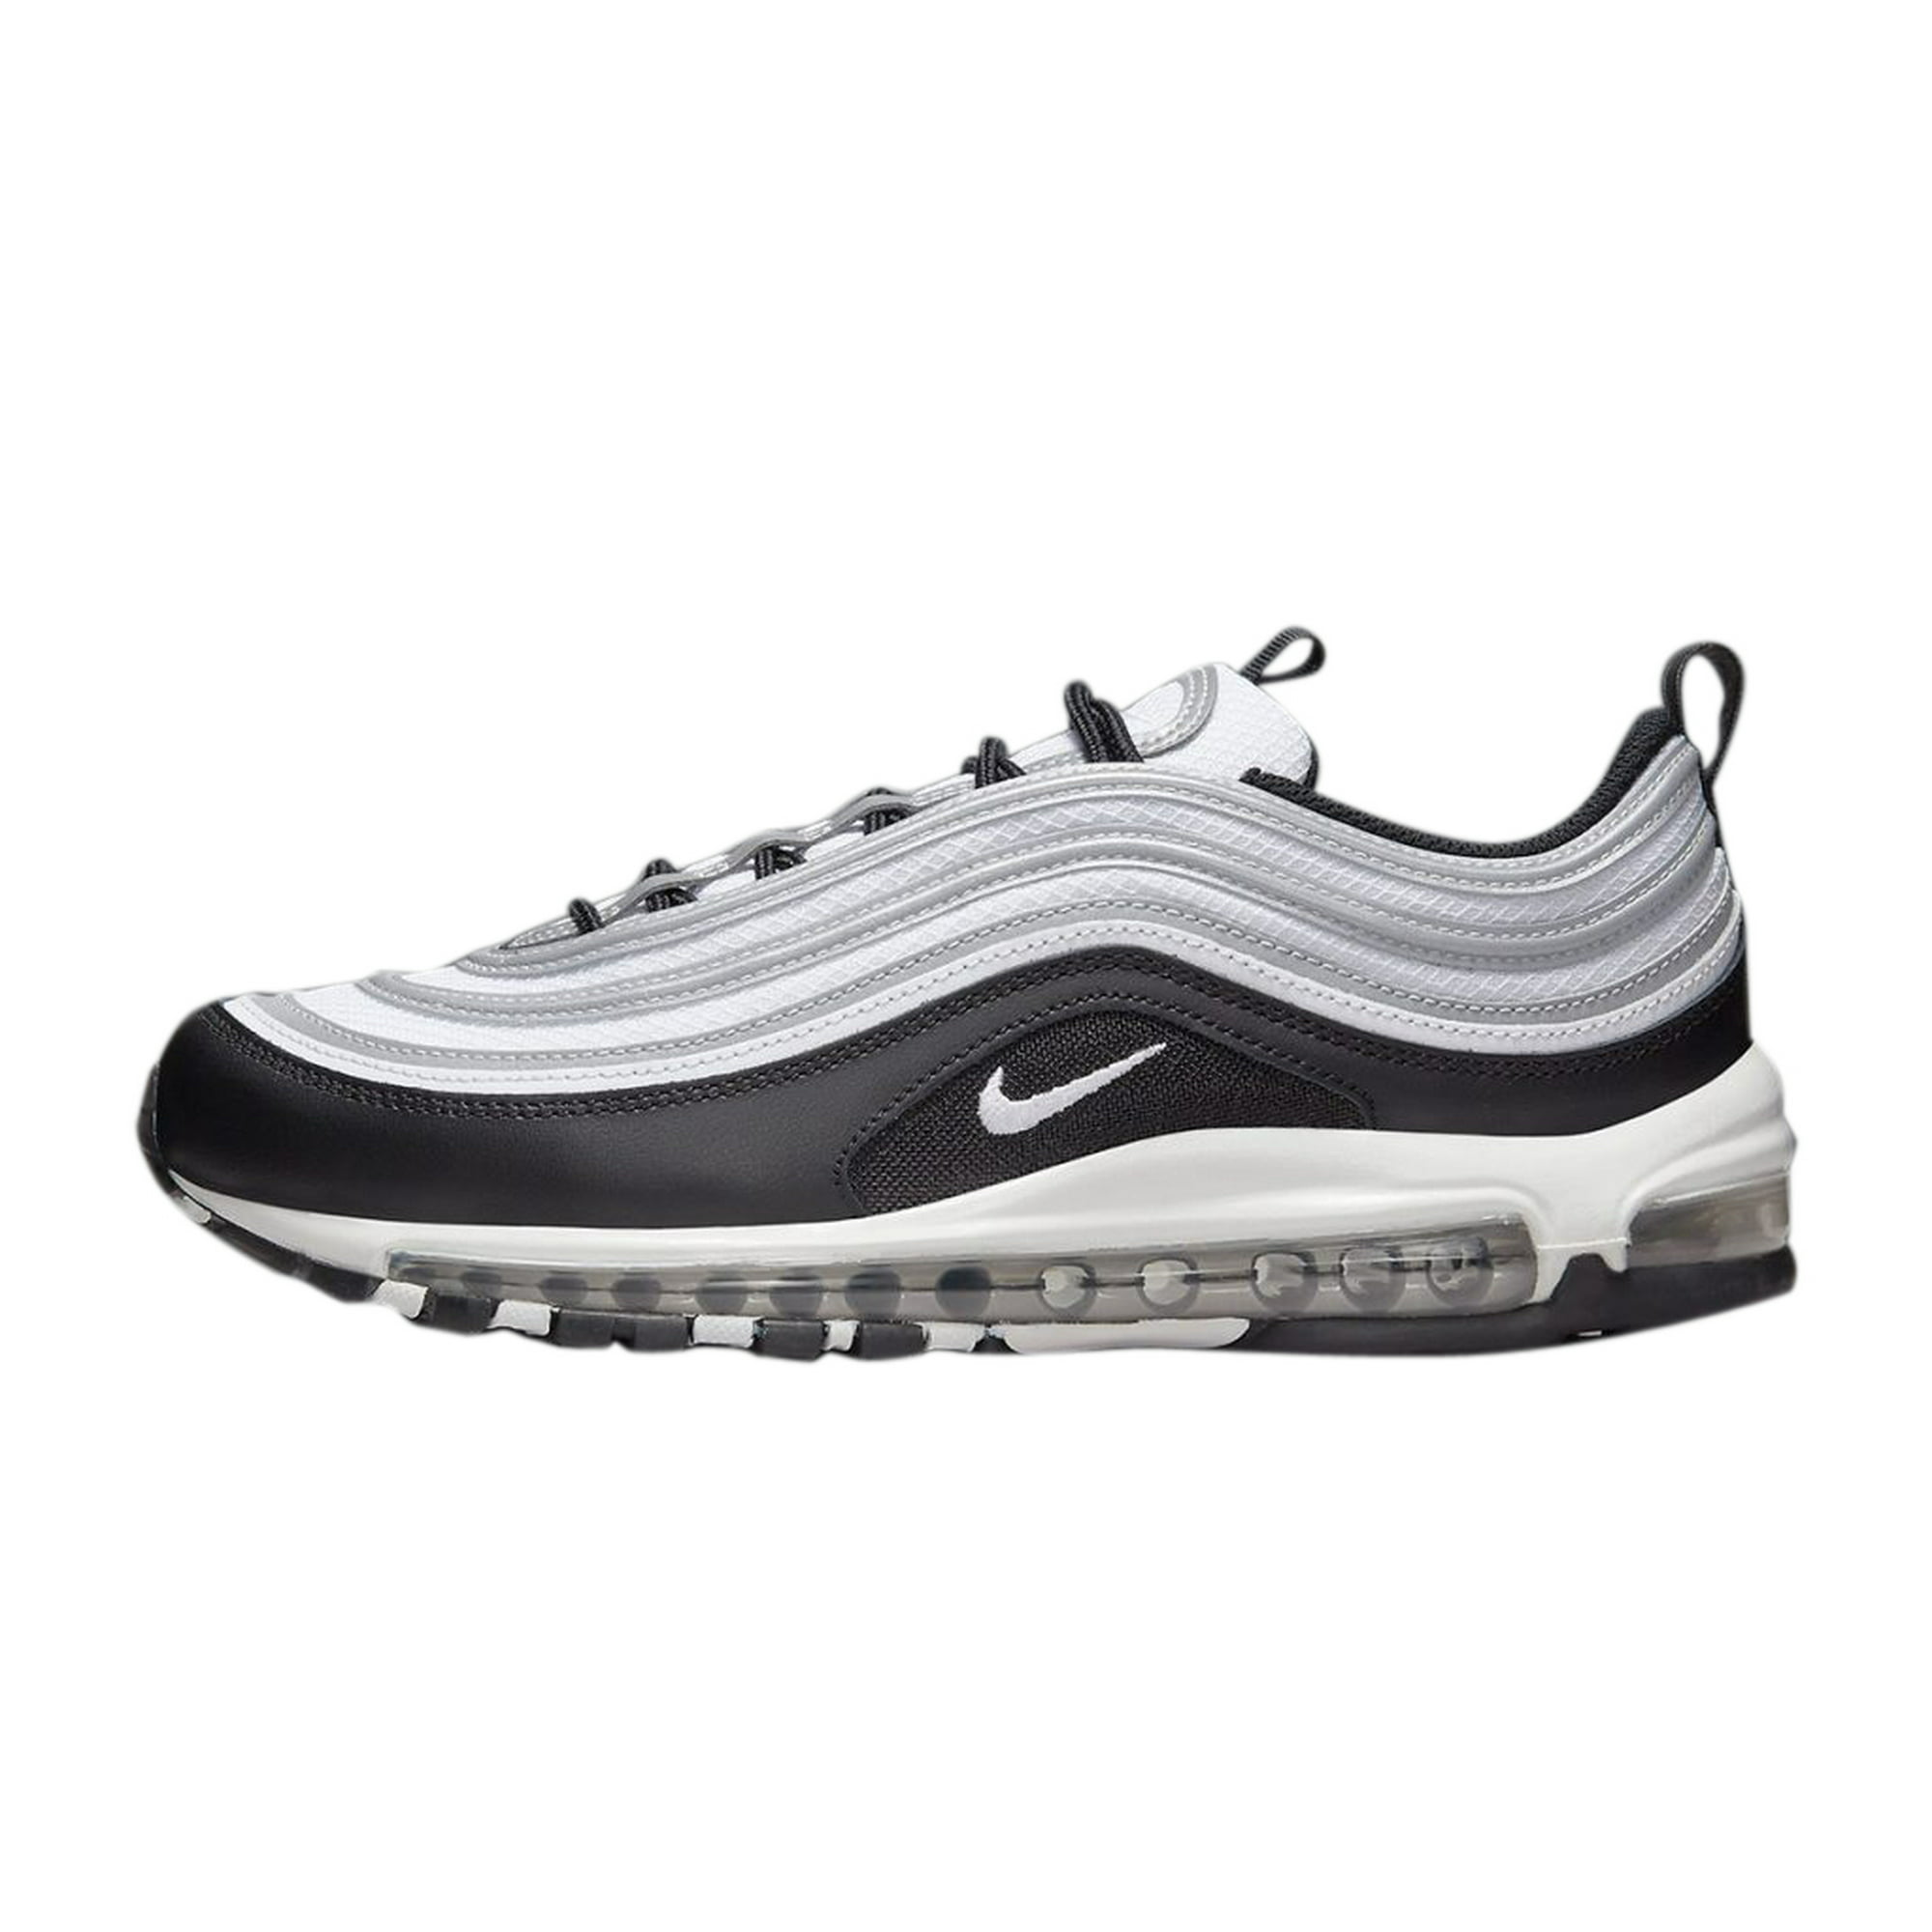 Men's Nike Air Max 97 Black/White-Reflect Silver (DM0027 001) - 9 Walmart.com